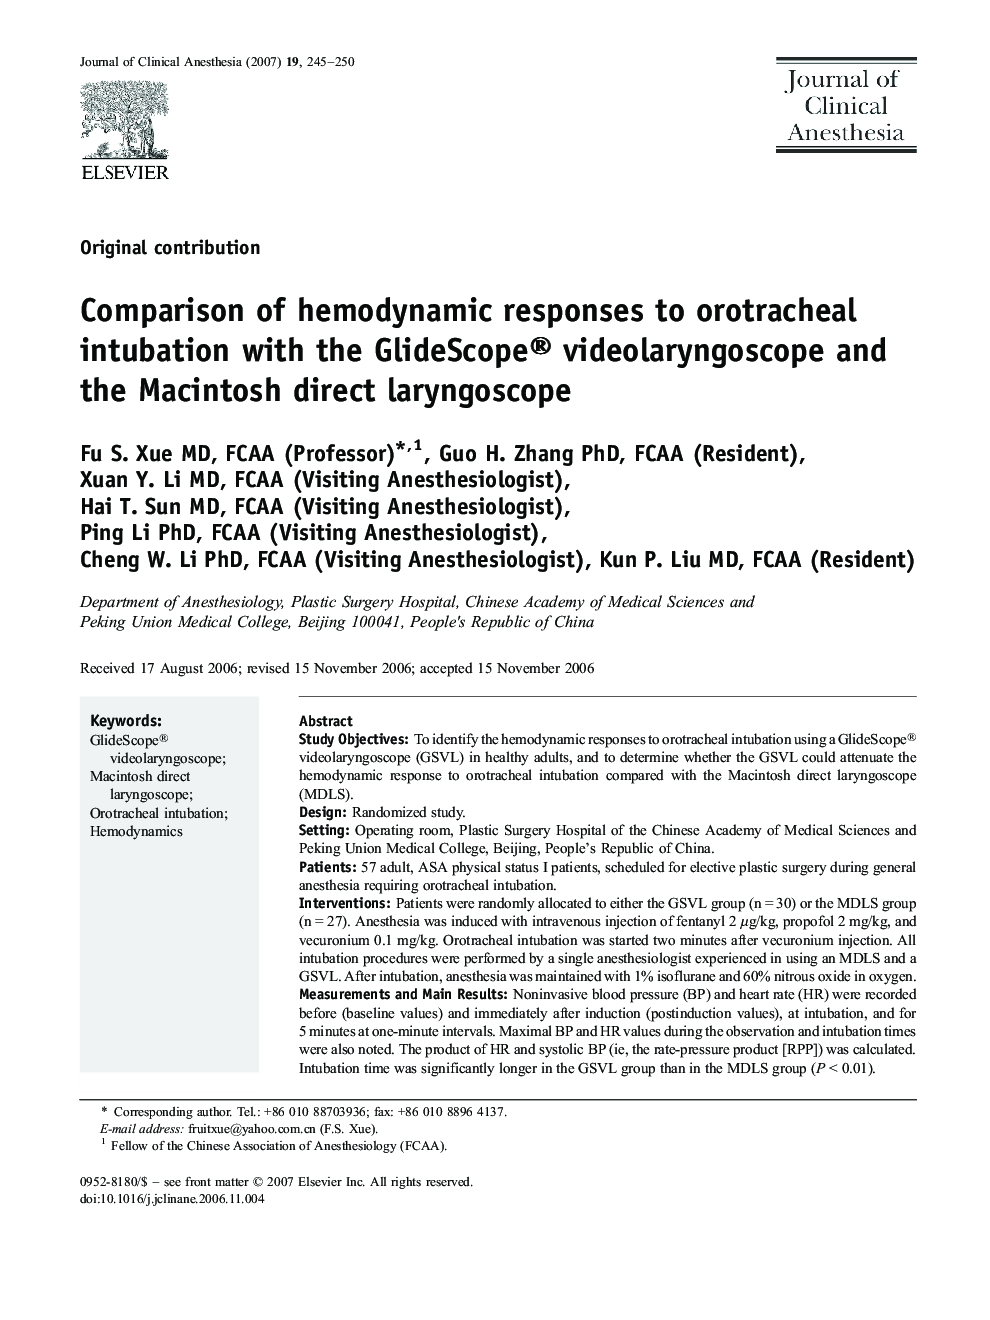 Comparison of hemodynamic responses to orotracheal intubation with the GlideScope® videolaryngoscope and the Macintosh direct laryngoscope